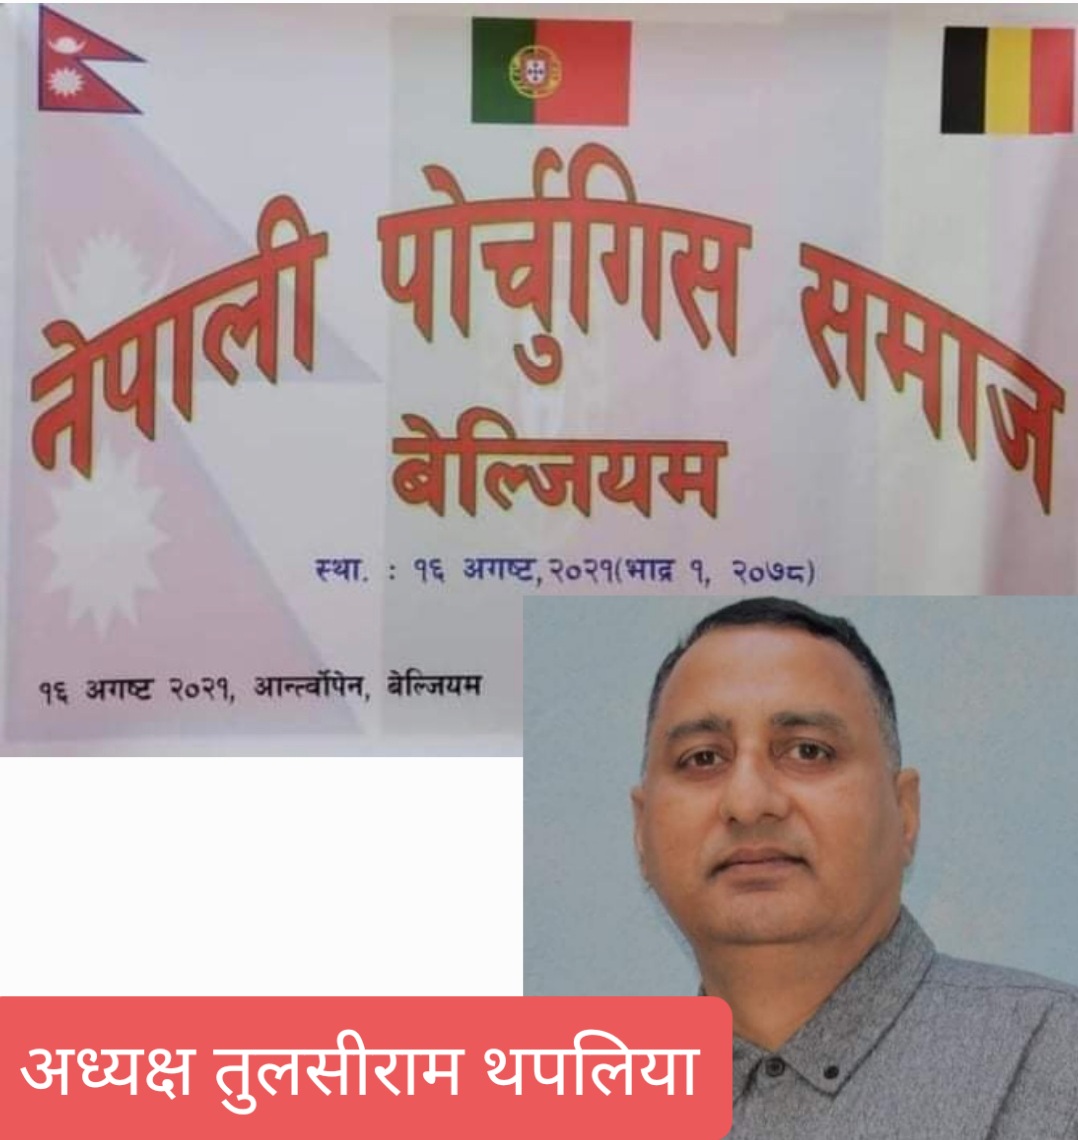 नेपाली पोर्चुगिस समाज बेल्जियम गठन, अध्यक्षमा तुलसीराम थपलिया